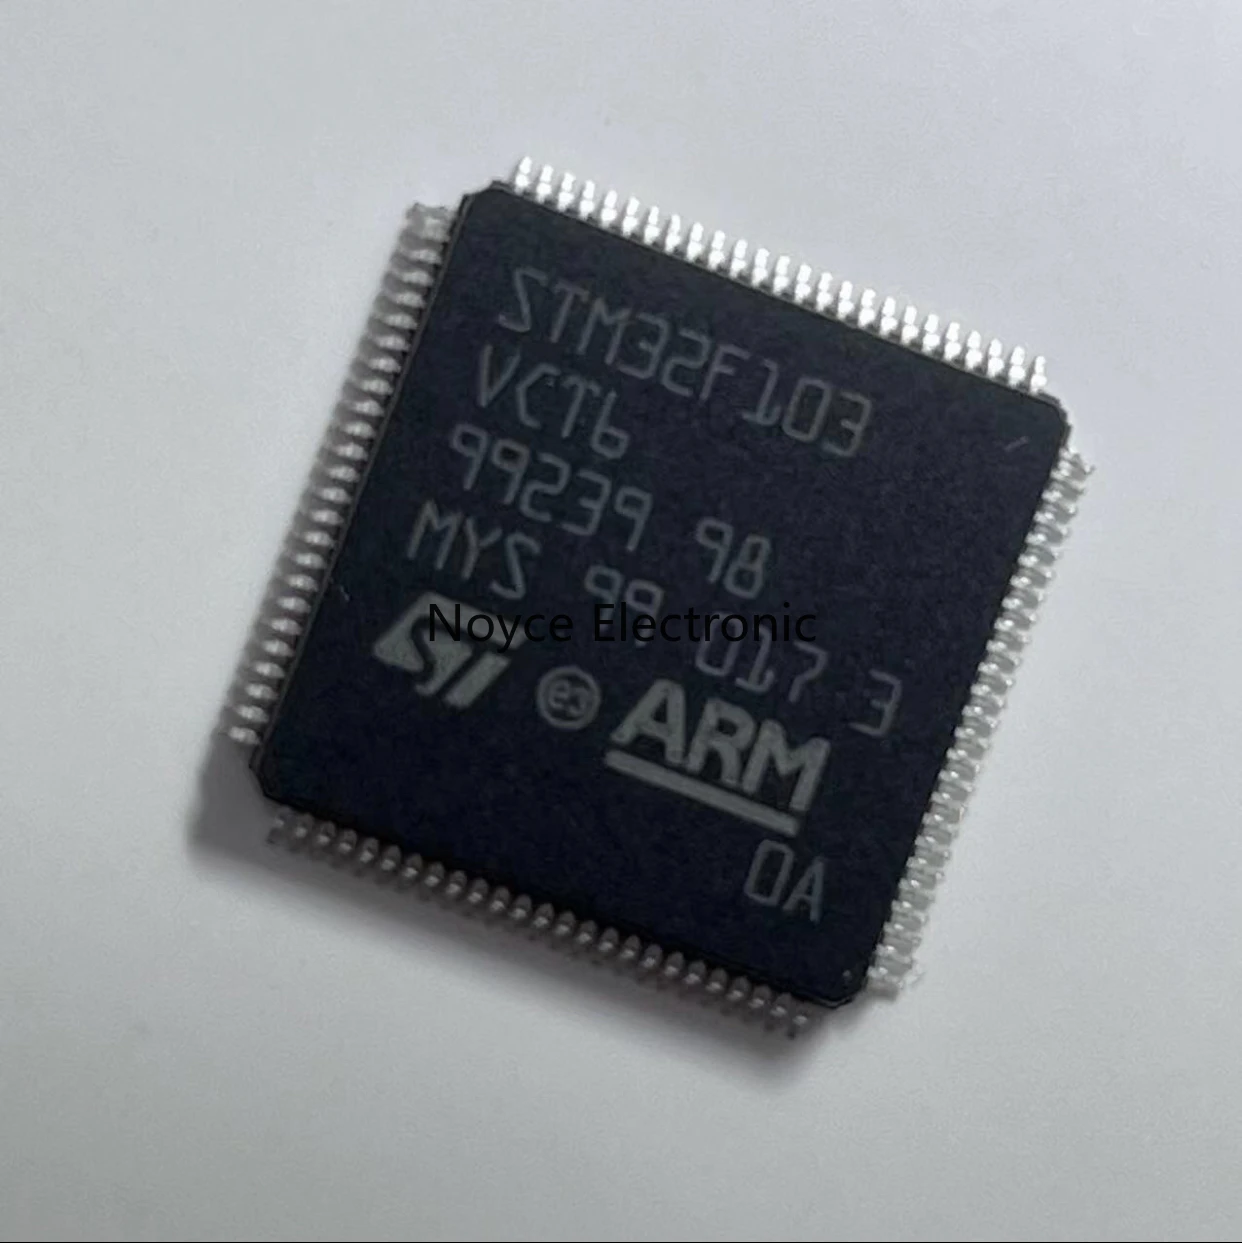 stm32f103c8t6 stm32f103cbt6 stm32f103rct6 stm32f103rft6 stm32f103vct6 stm32f103ret6 stm32f103c6t6 stm32f103 series stm32 ic chip 1/pcs STM32F103 LQFP100 STM32F103VCT6 32-Bit MCU (Microcontroller)